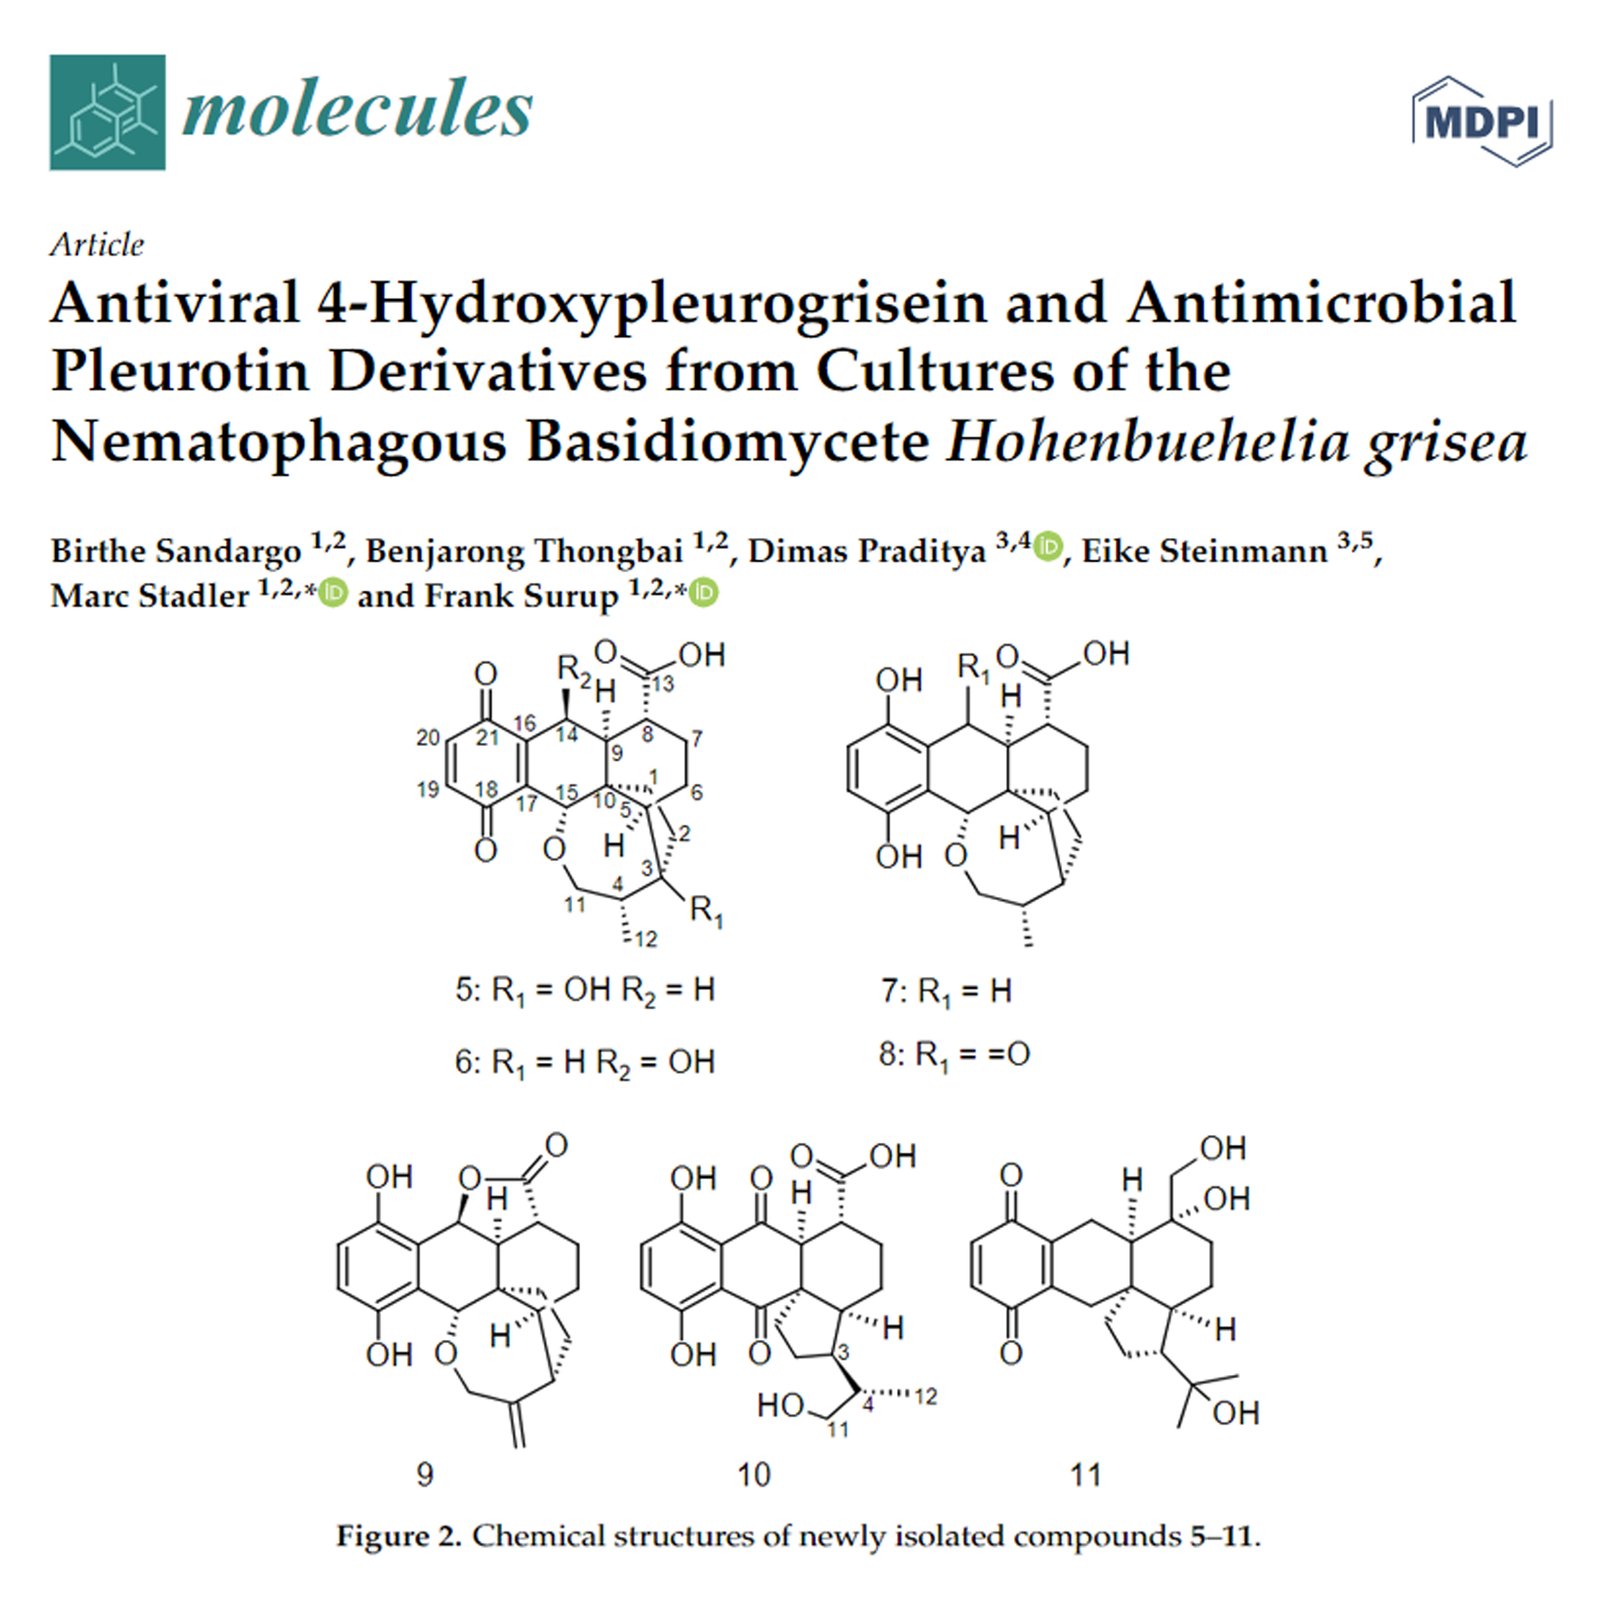 Antiviral 4-Hydroxypleurogrisein and Antimicrobial Pleurotin Derivatives from Cultures of the Nematophagous Basidiomycete Hohenbuehelia grisea